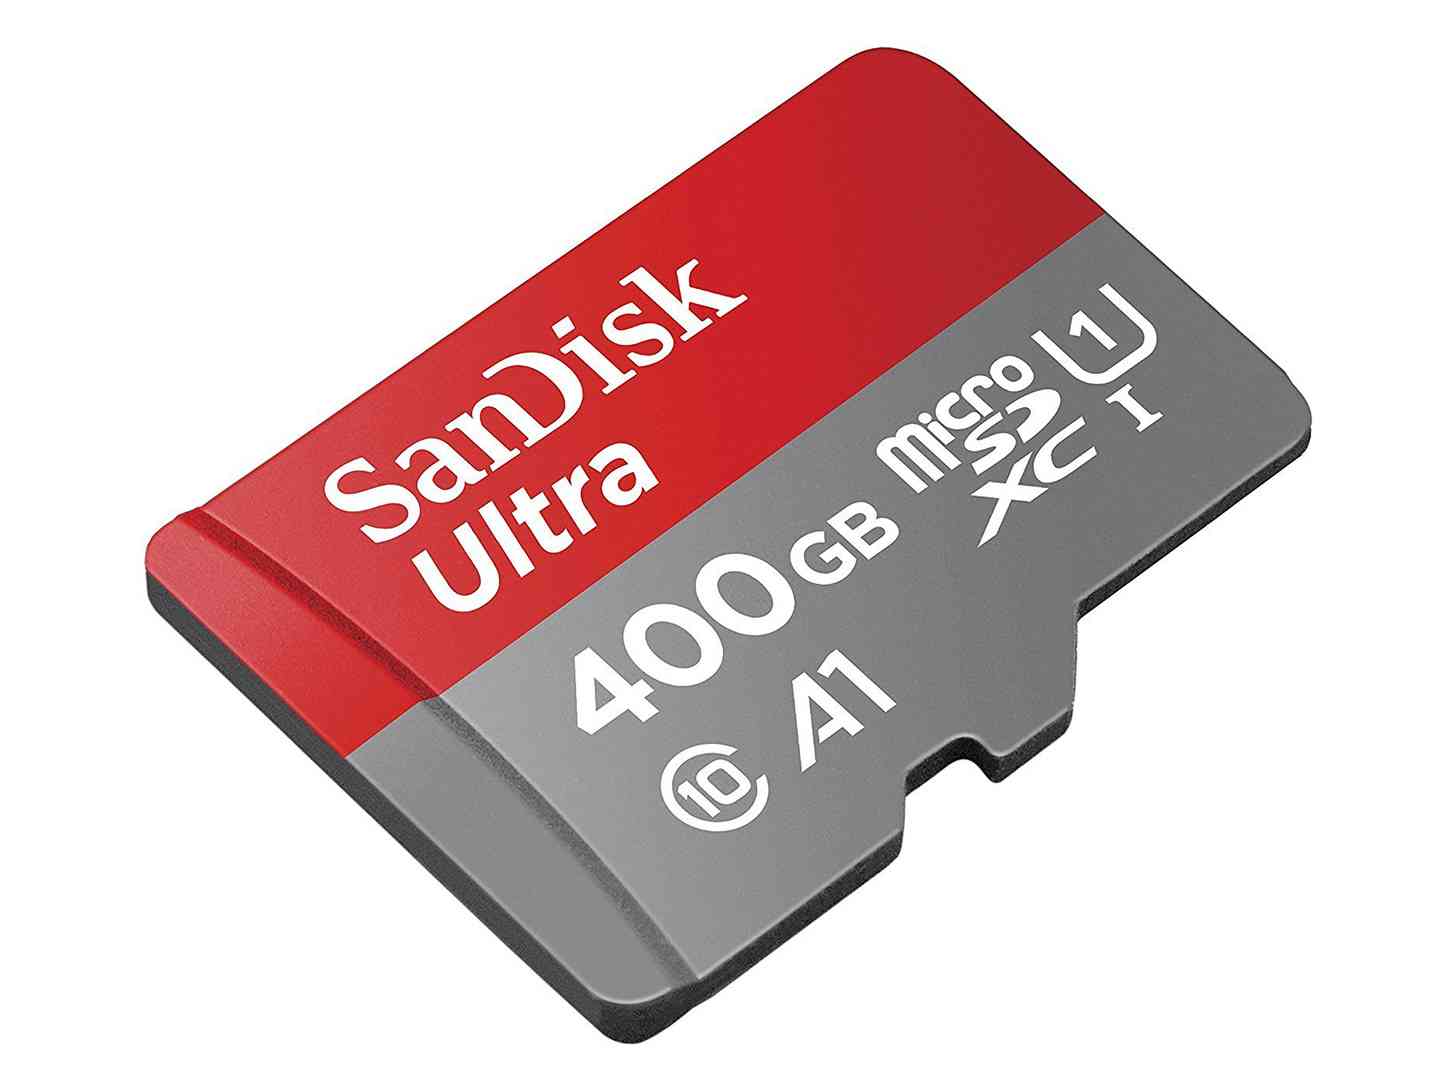 SanDisk 400GB microSD card official